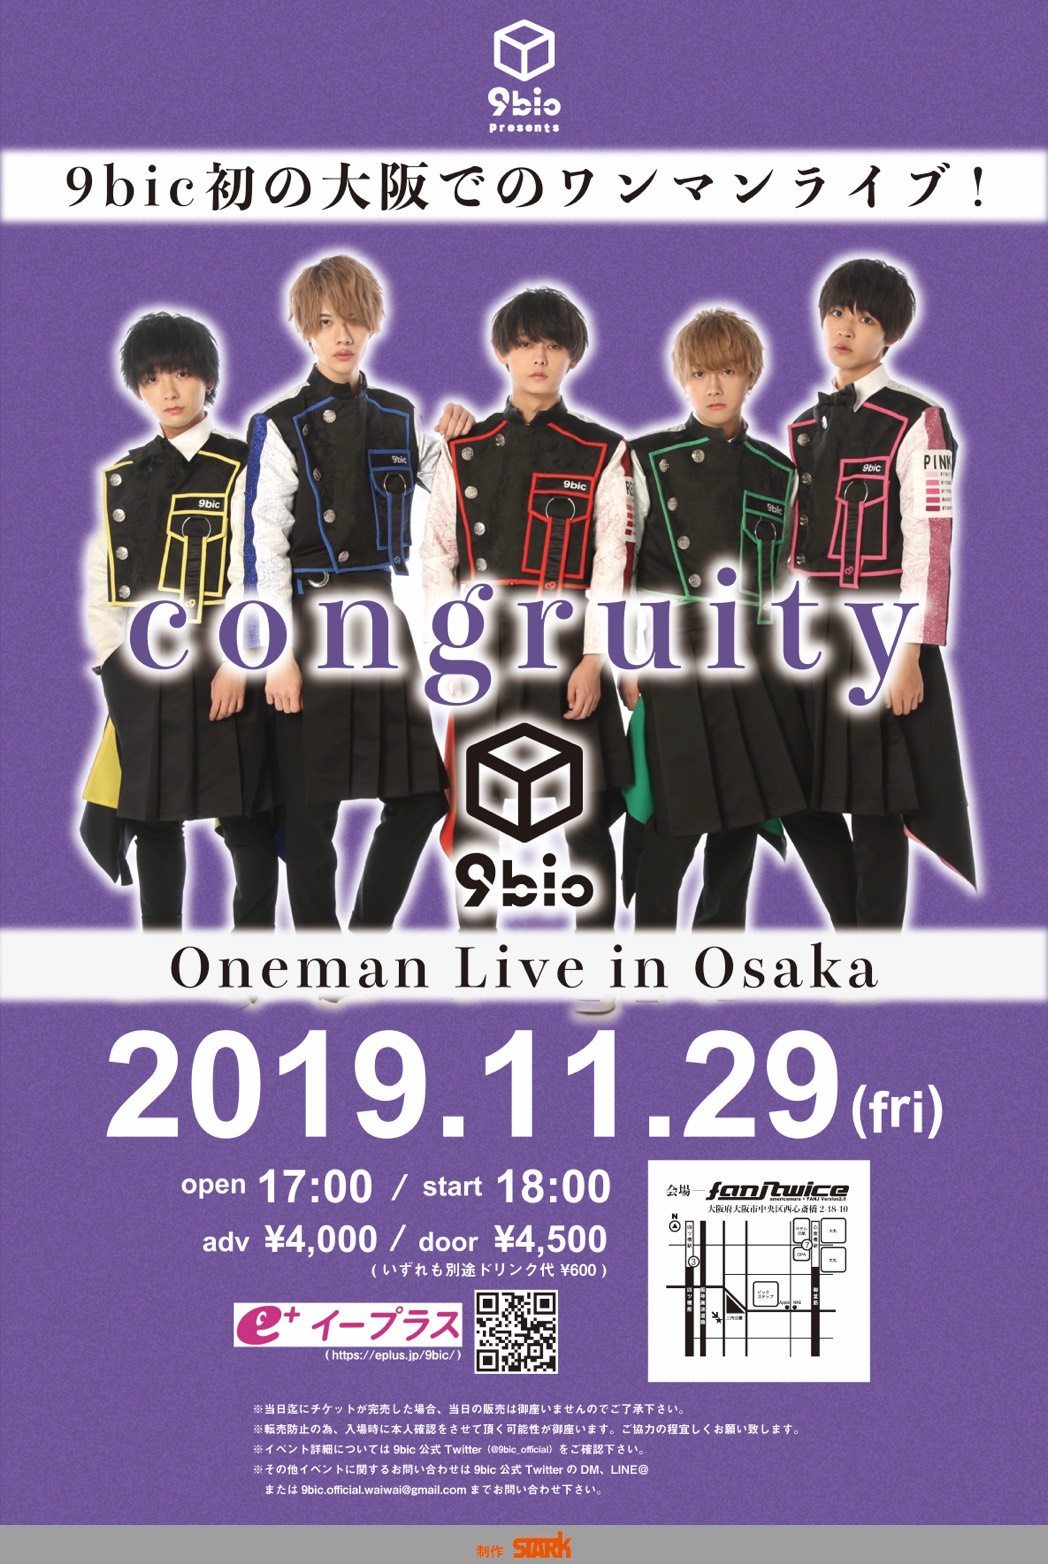 「9bic Oneman Live in Osaka ~congruity~」